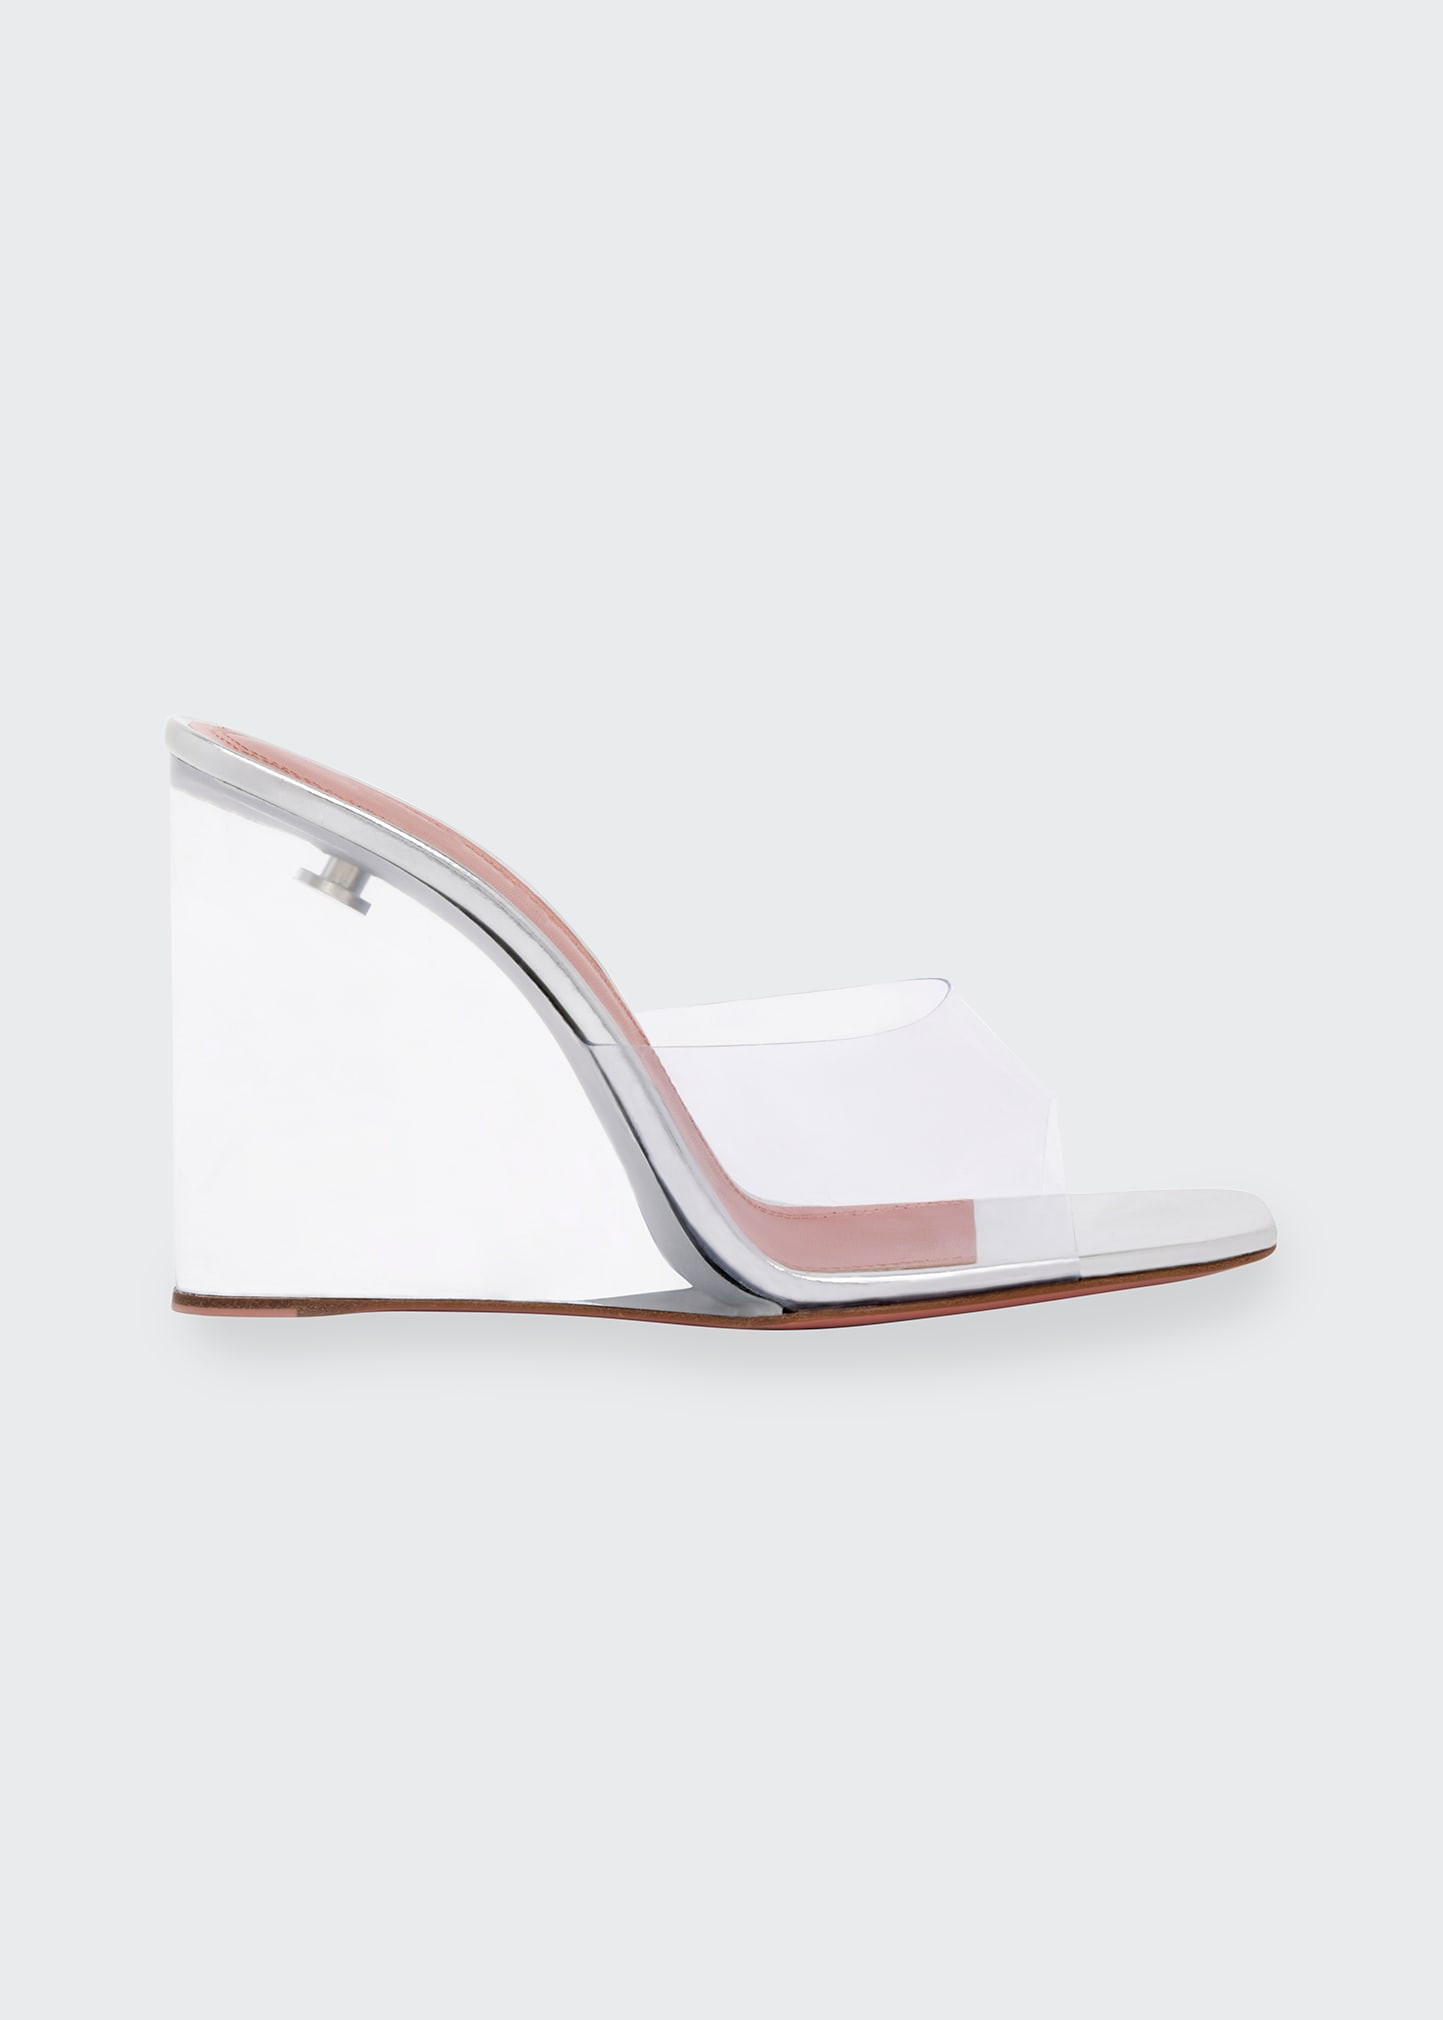 Amina Muaddi Lupita Glass-Wedge Slide Sandals